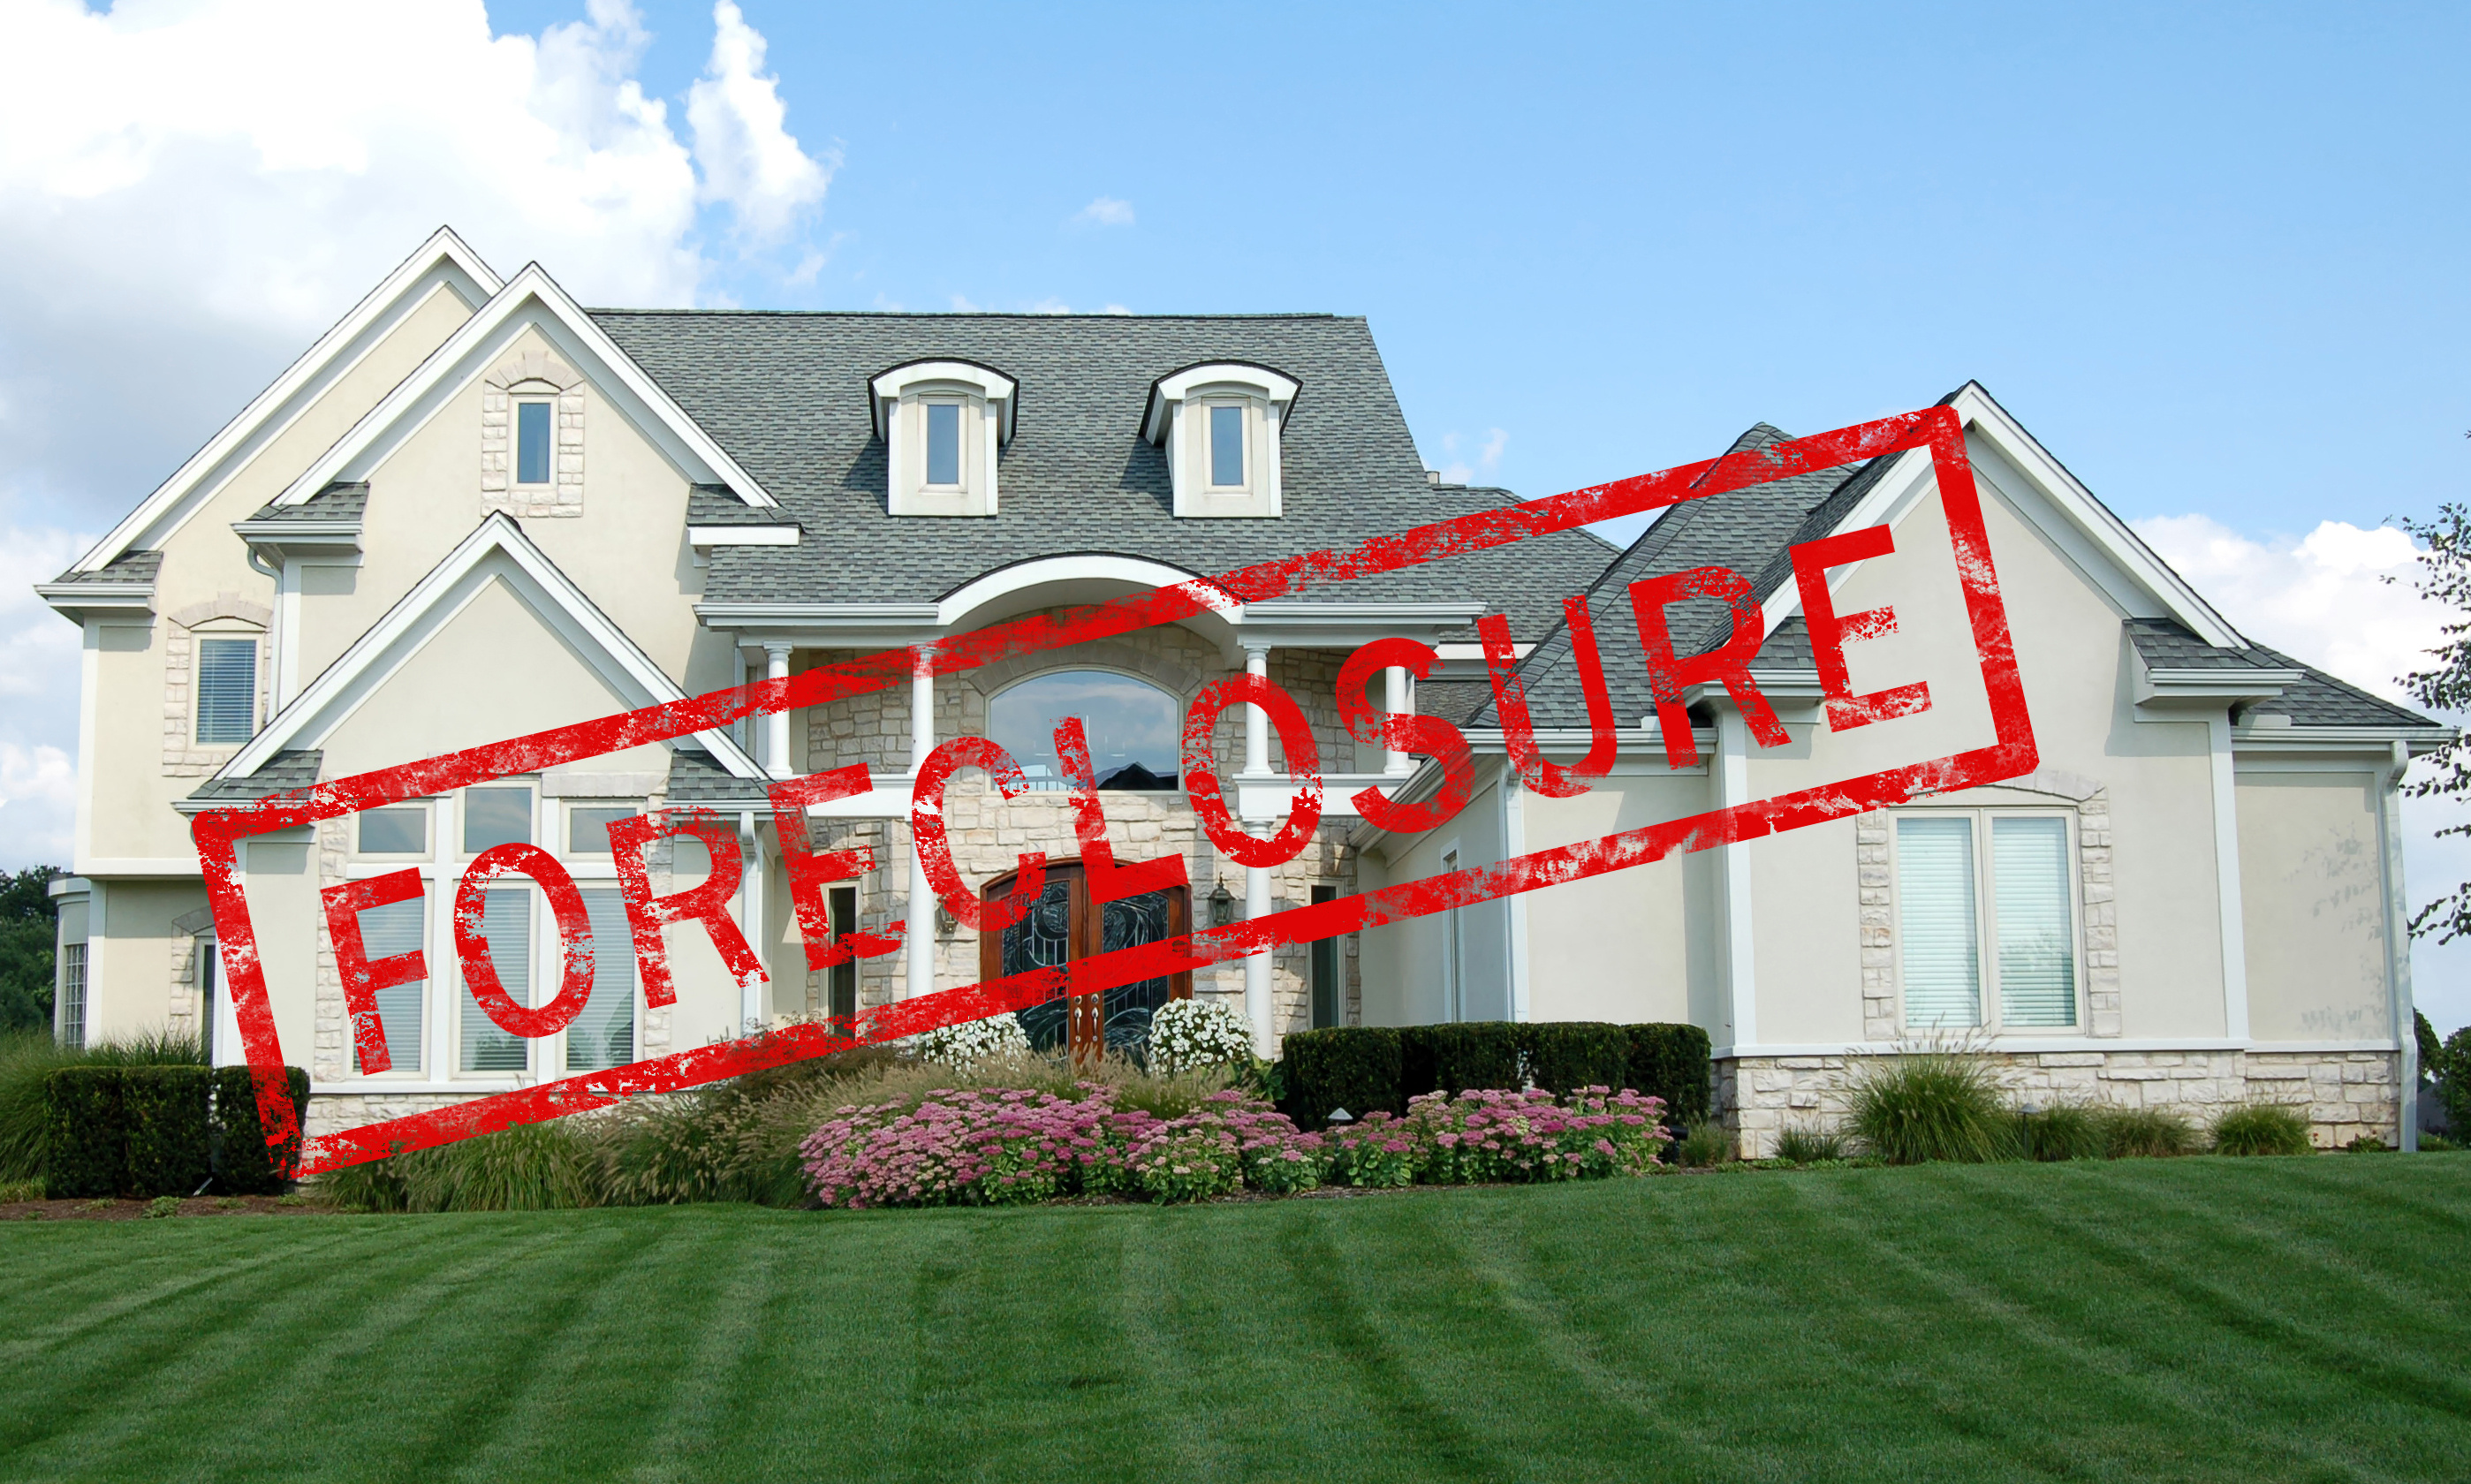 Call Appraise Colorado Inc to discuss valuations regarding Adams foreclosures